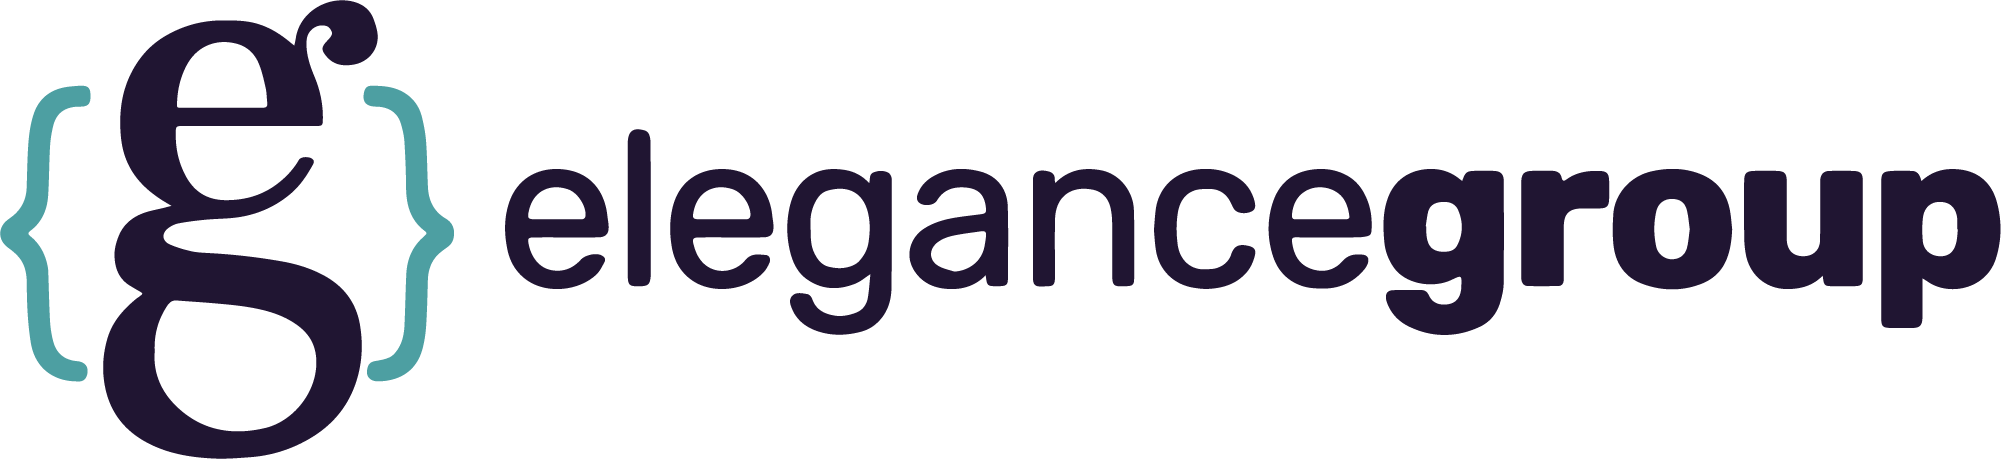 elegance group logo